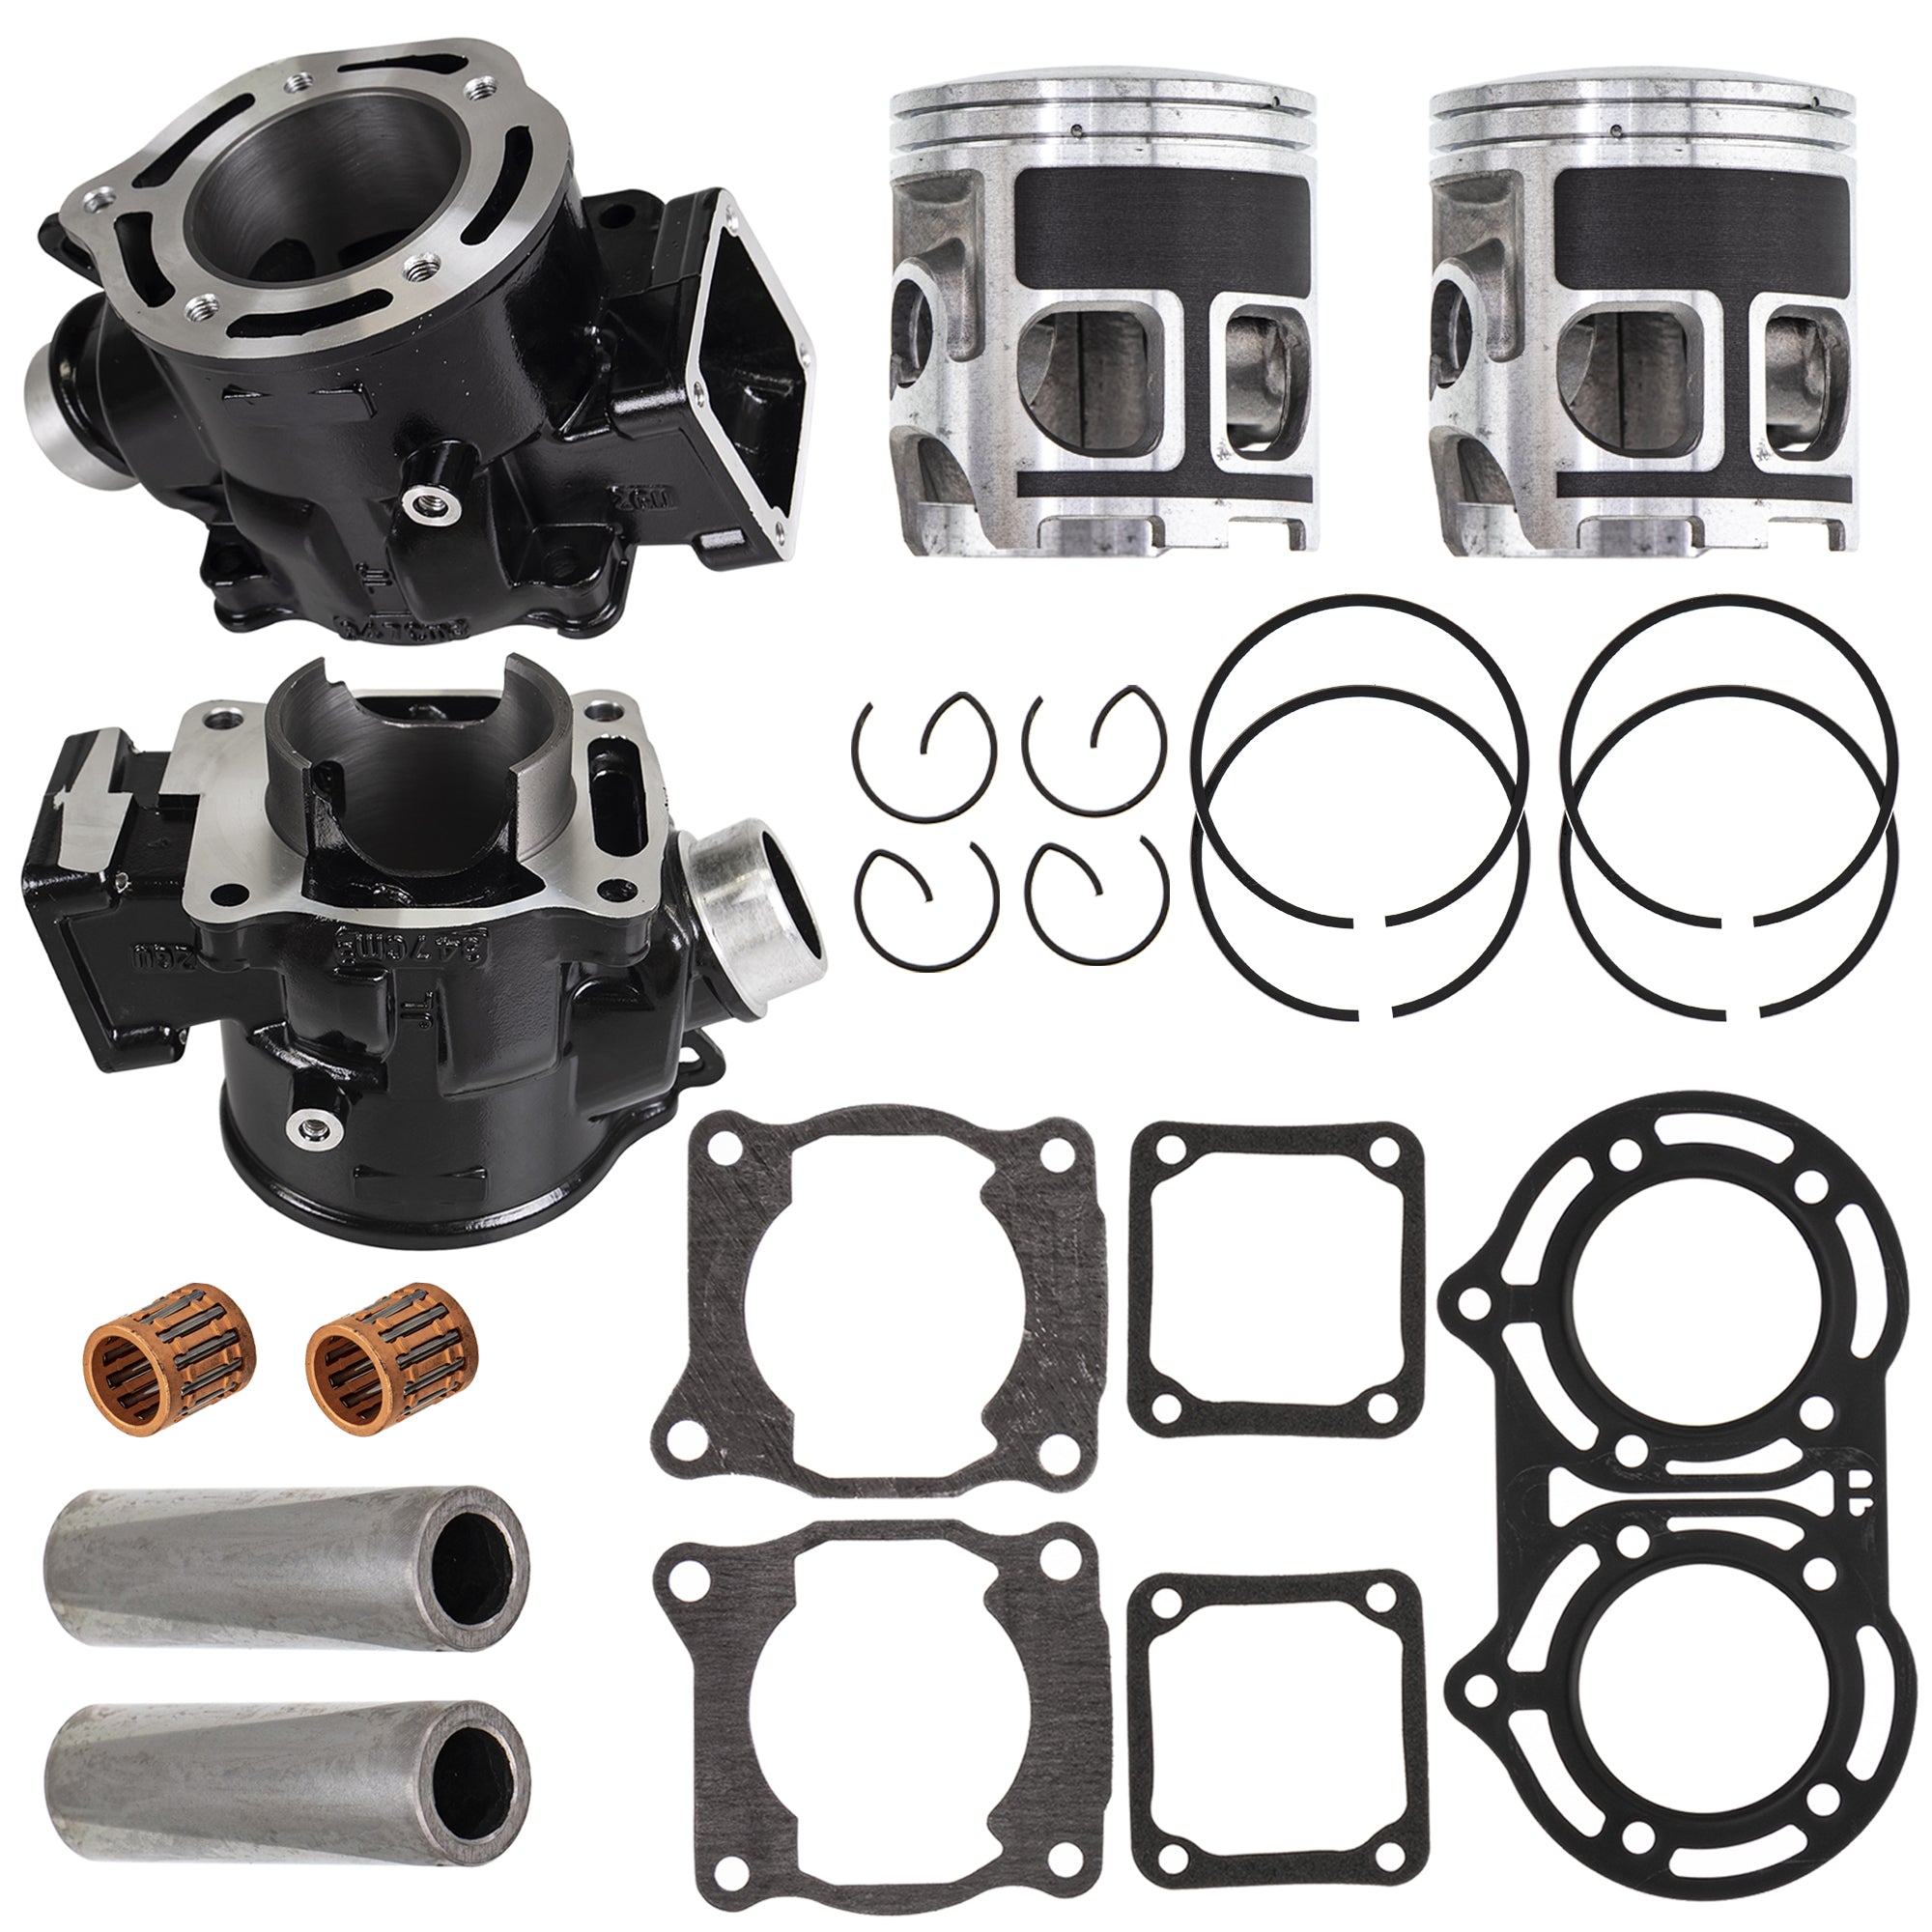 Top End Kit Cylinder Piston Gasket for Yamaha Banshee GU-11321-00-00 93450-17129-00 NICHE MK1000989